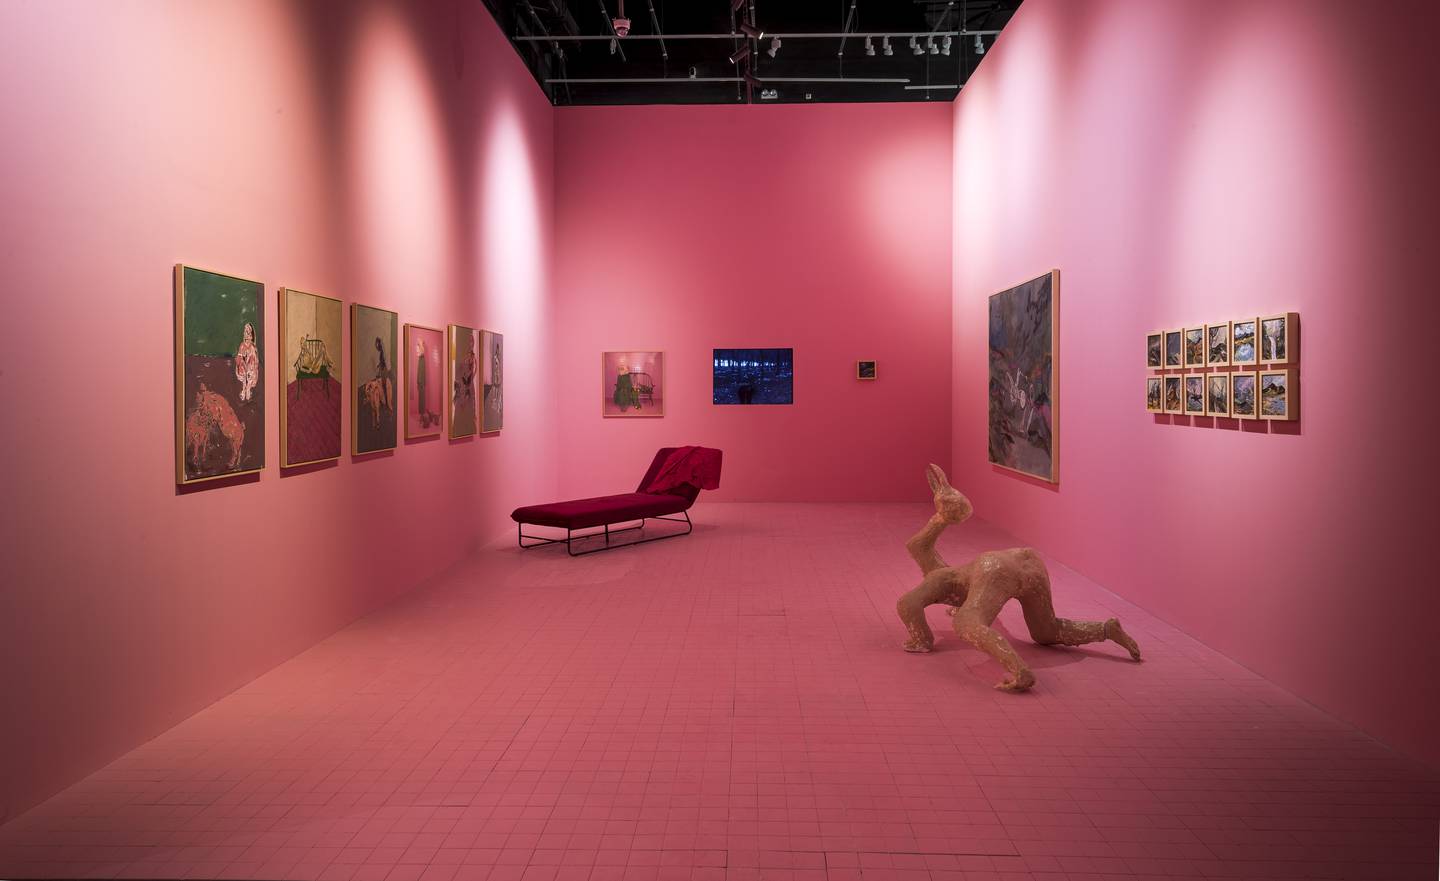 Maitha Abdalla's 'Too Close to the Sun' display at Abu Dhabi Art struck an overly pink note. Photo: Abu Dhabi Art